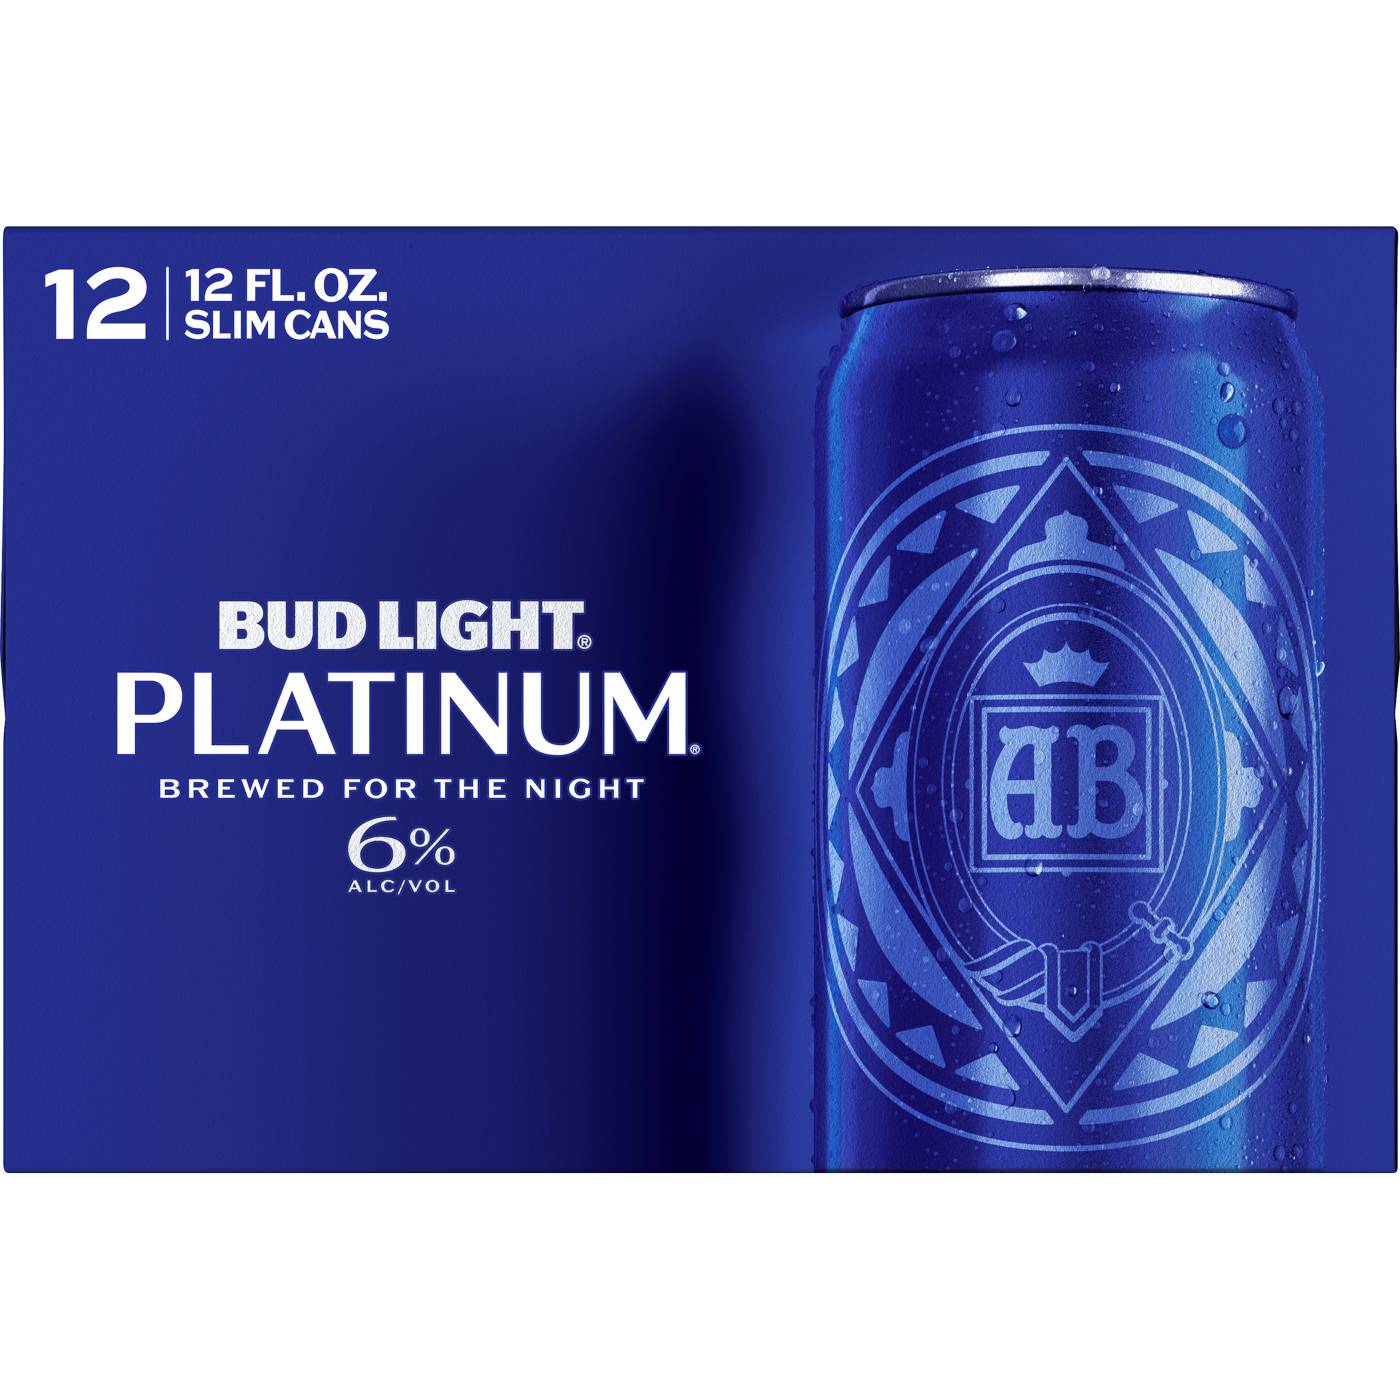 Bud Light Platinum Beer 12 pk Slim Cans; image 1 of 2